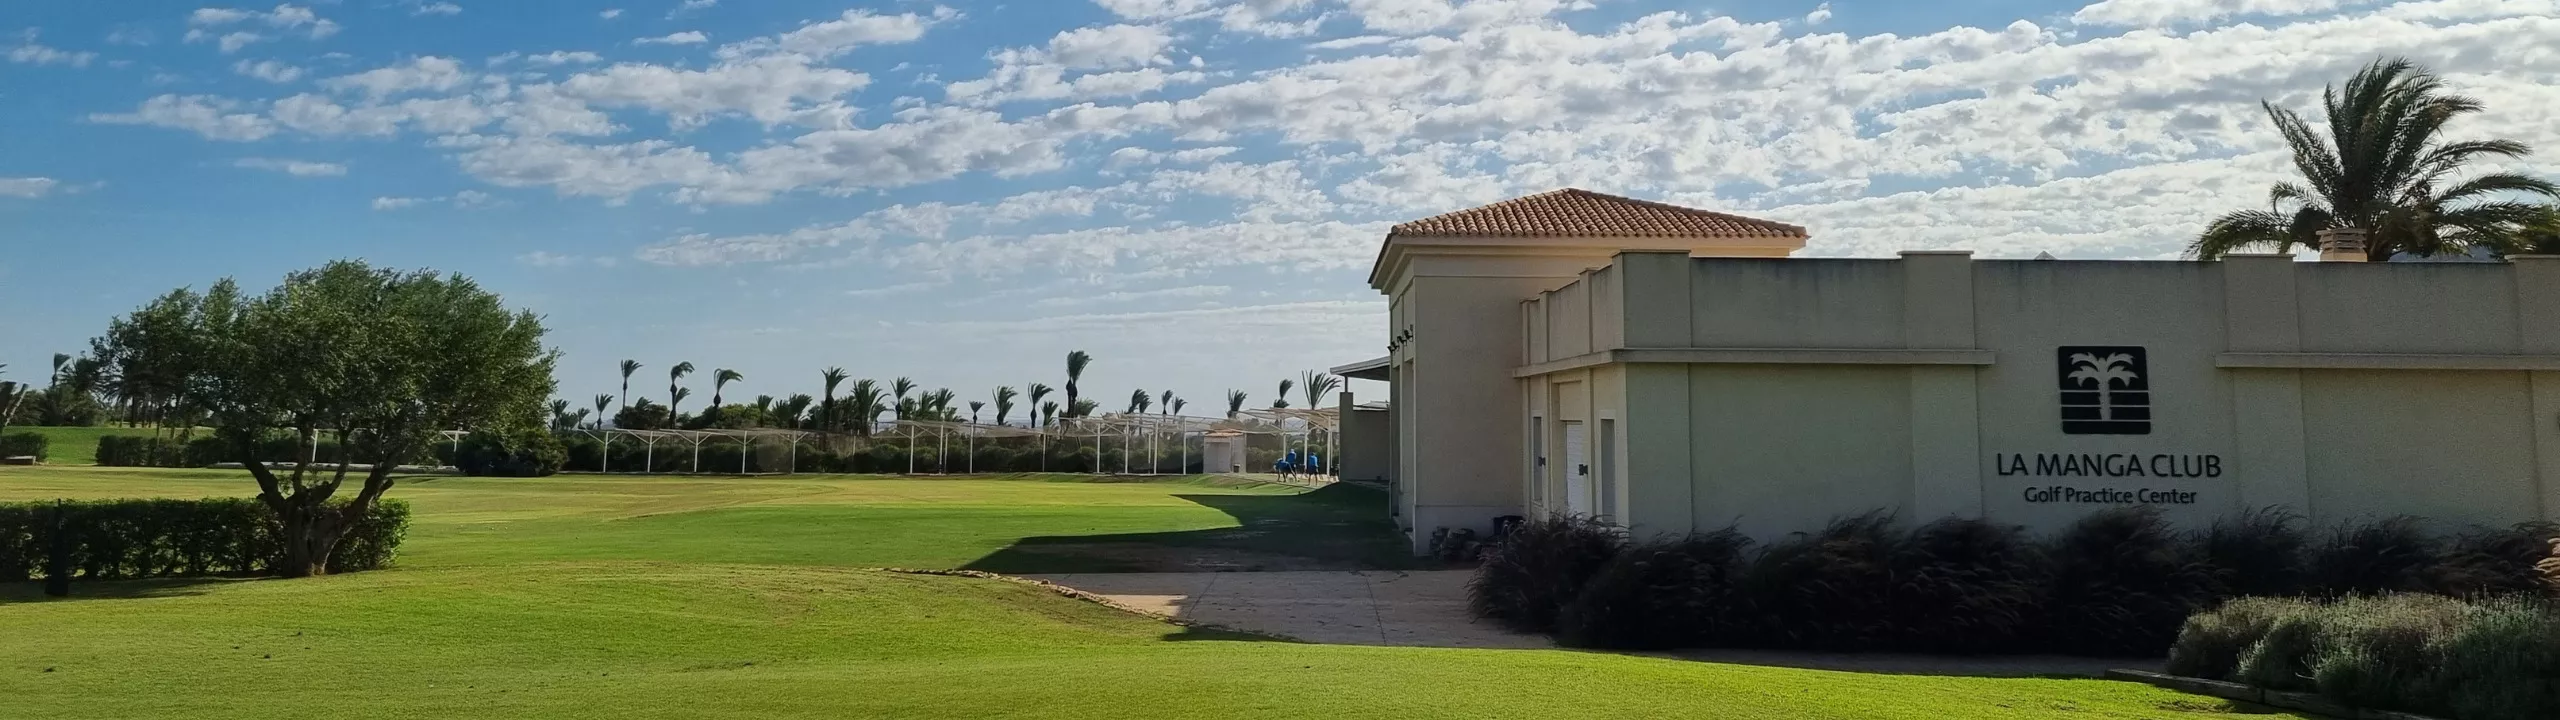 La Manga Club, golf training centre 